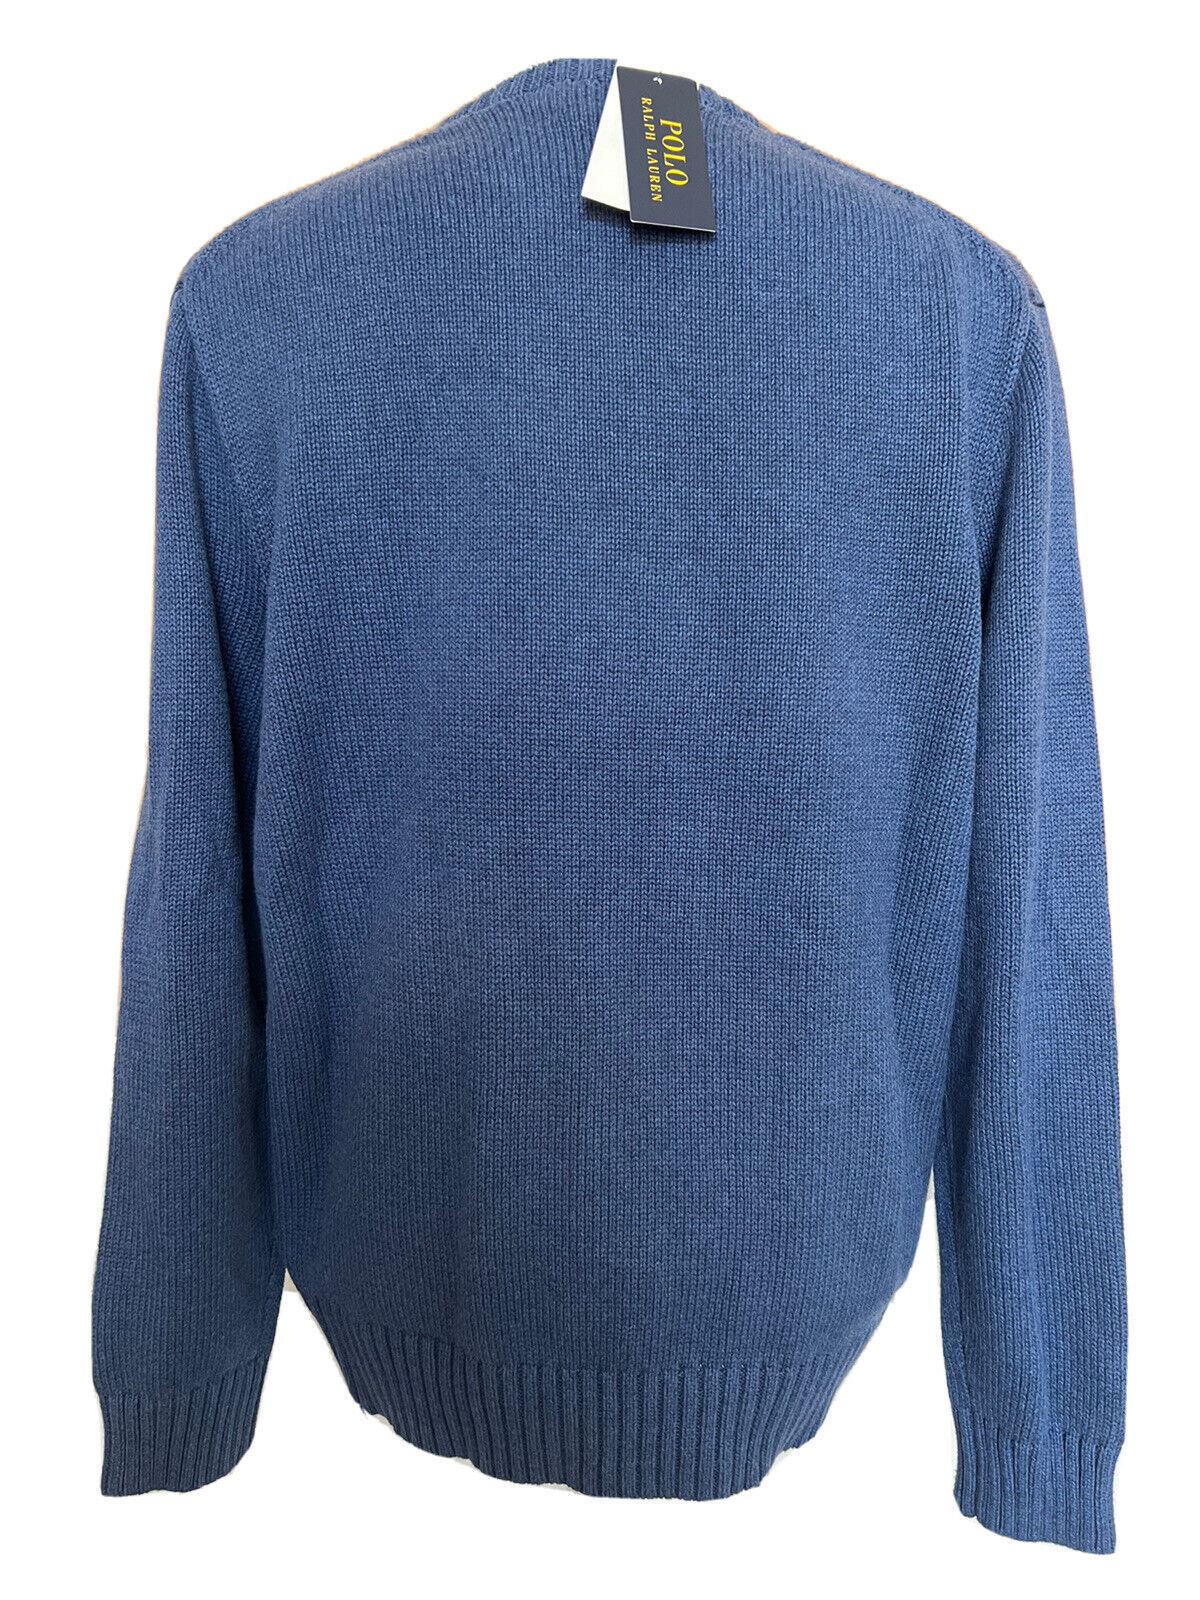 Neu mit Etikett: 398 $ Polo Ralph Lauren Bear Cotton Blue Sweatshirt 2XL 